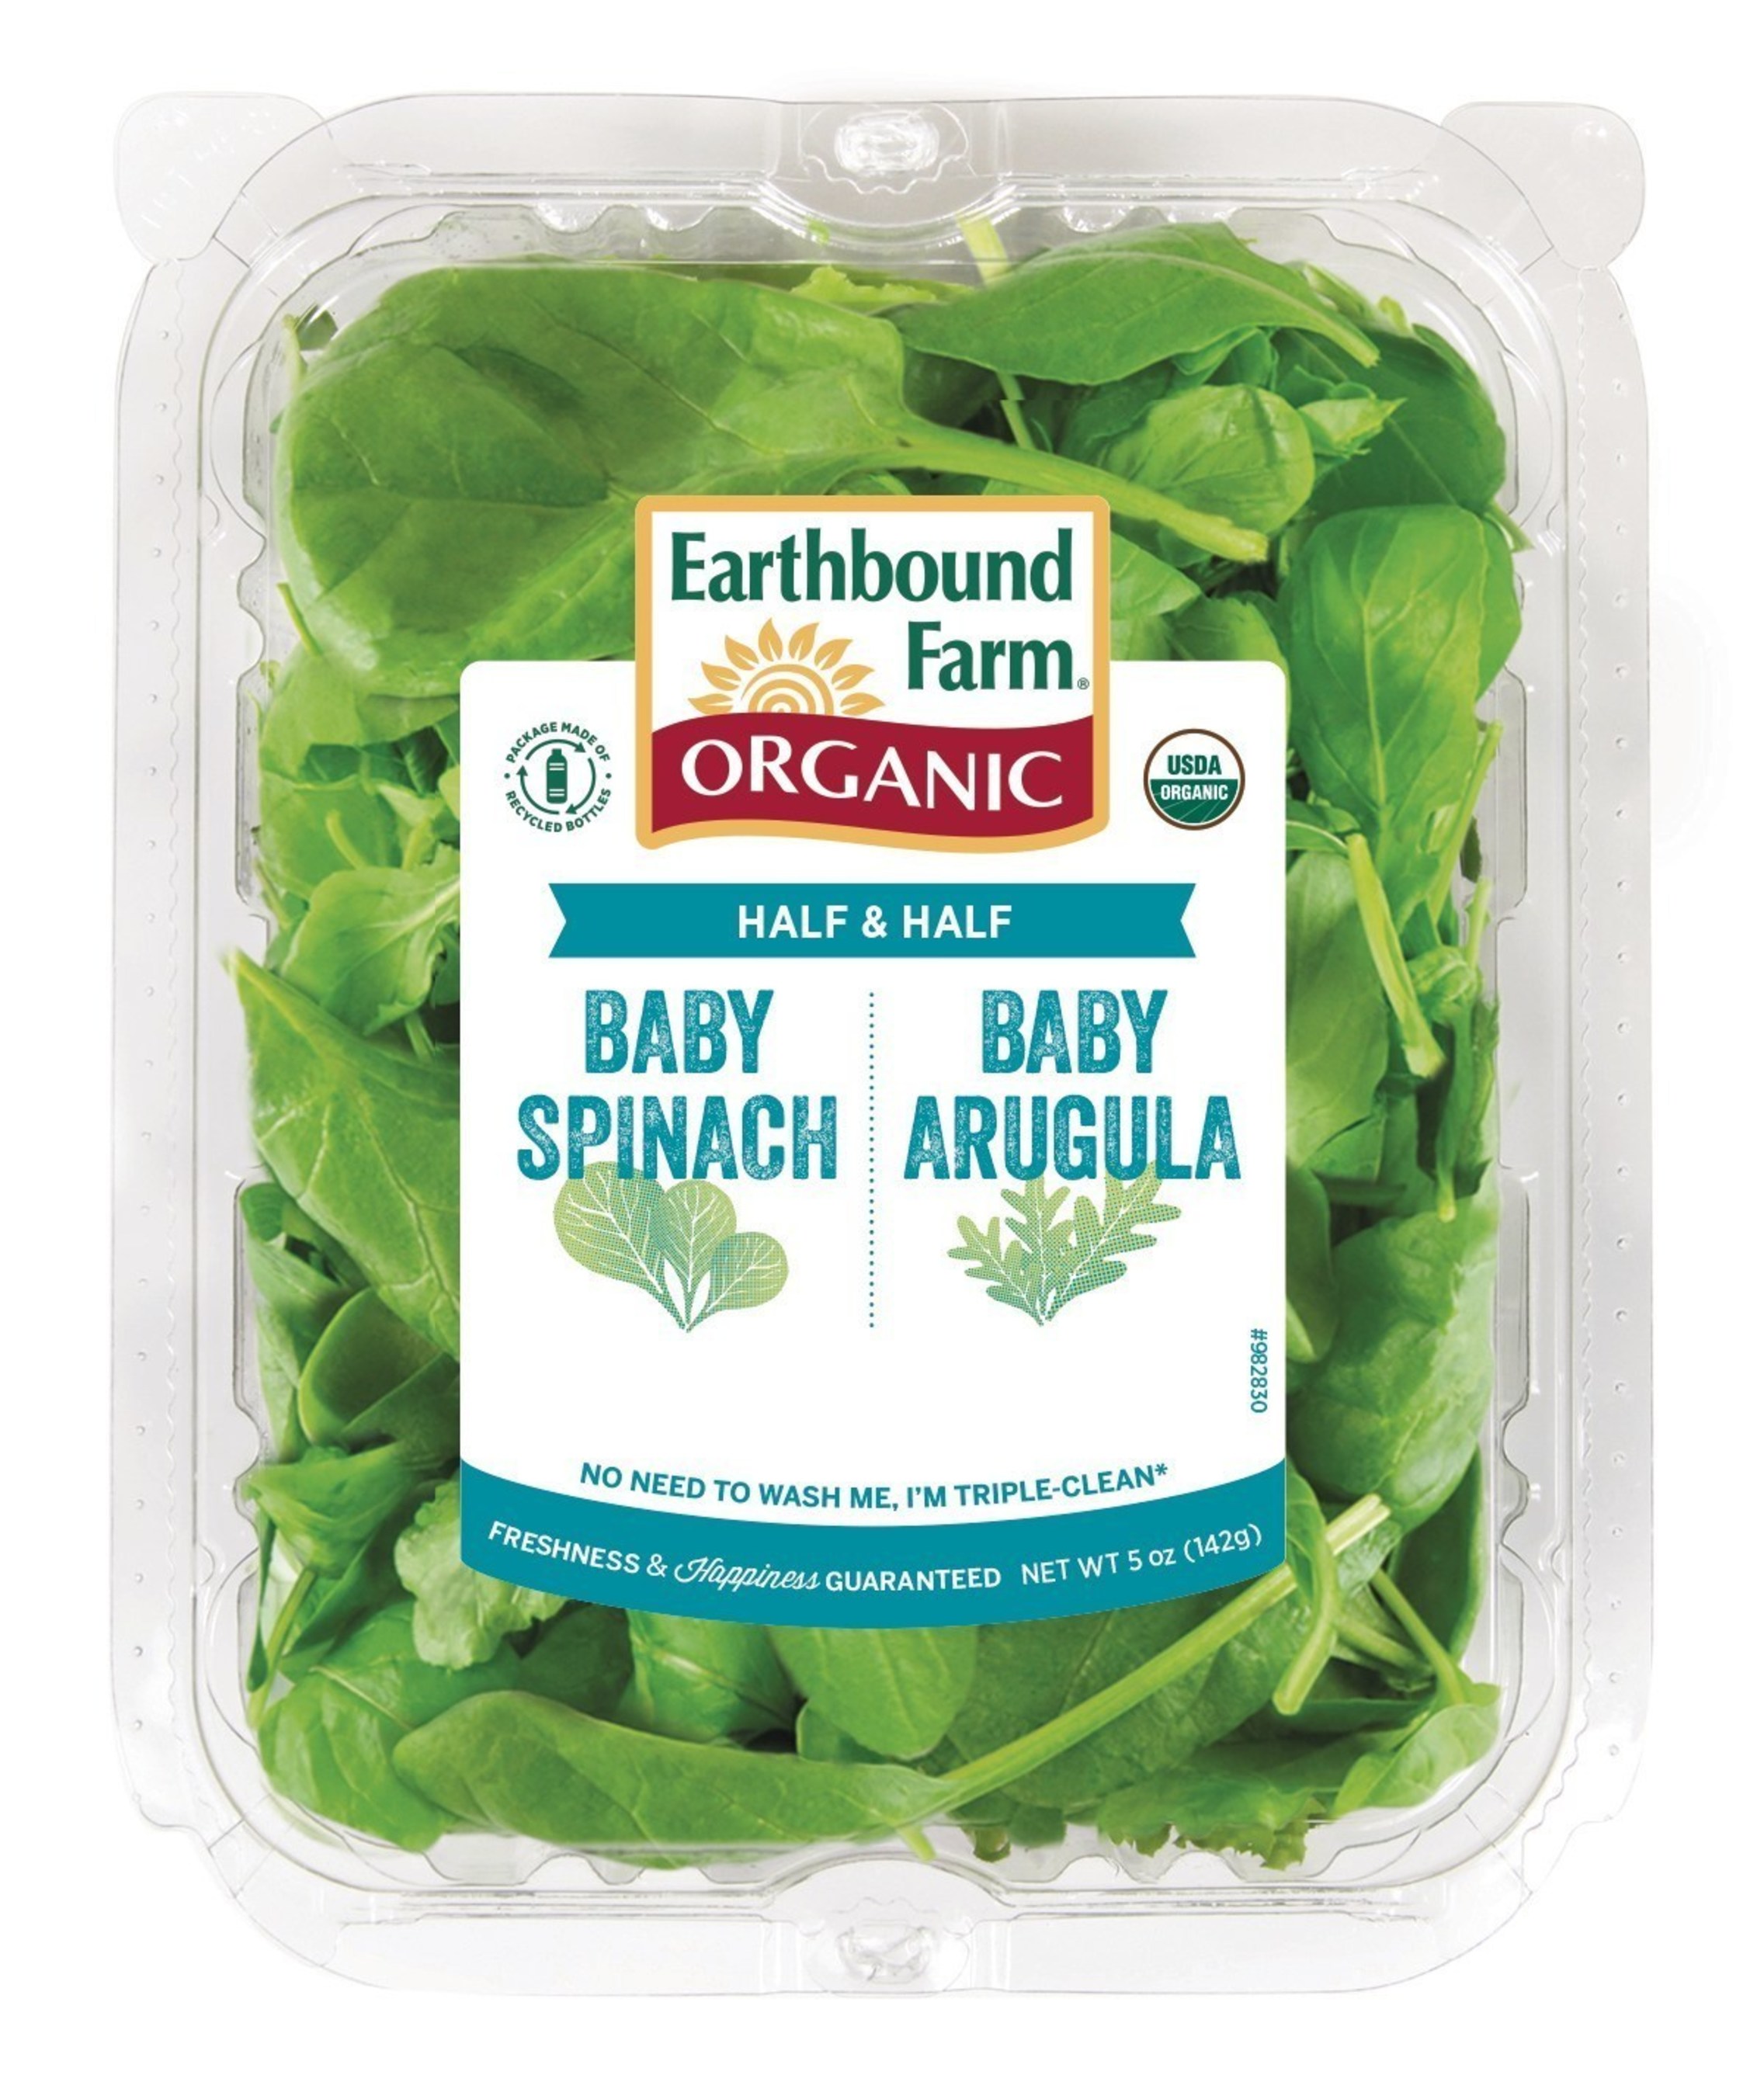 New organic Half & Half: Baby Spinach & Arugula blend from Earthbound Farm